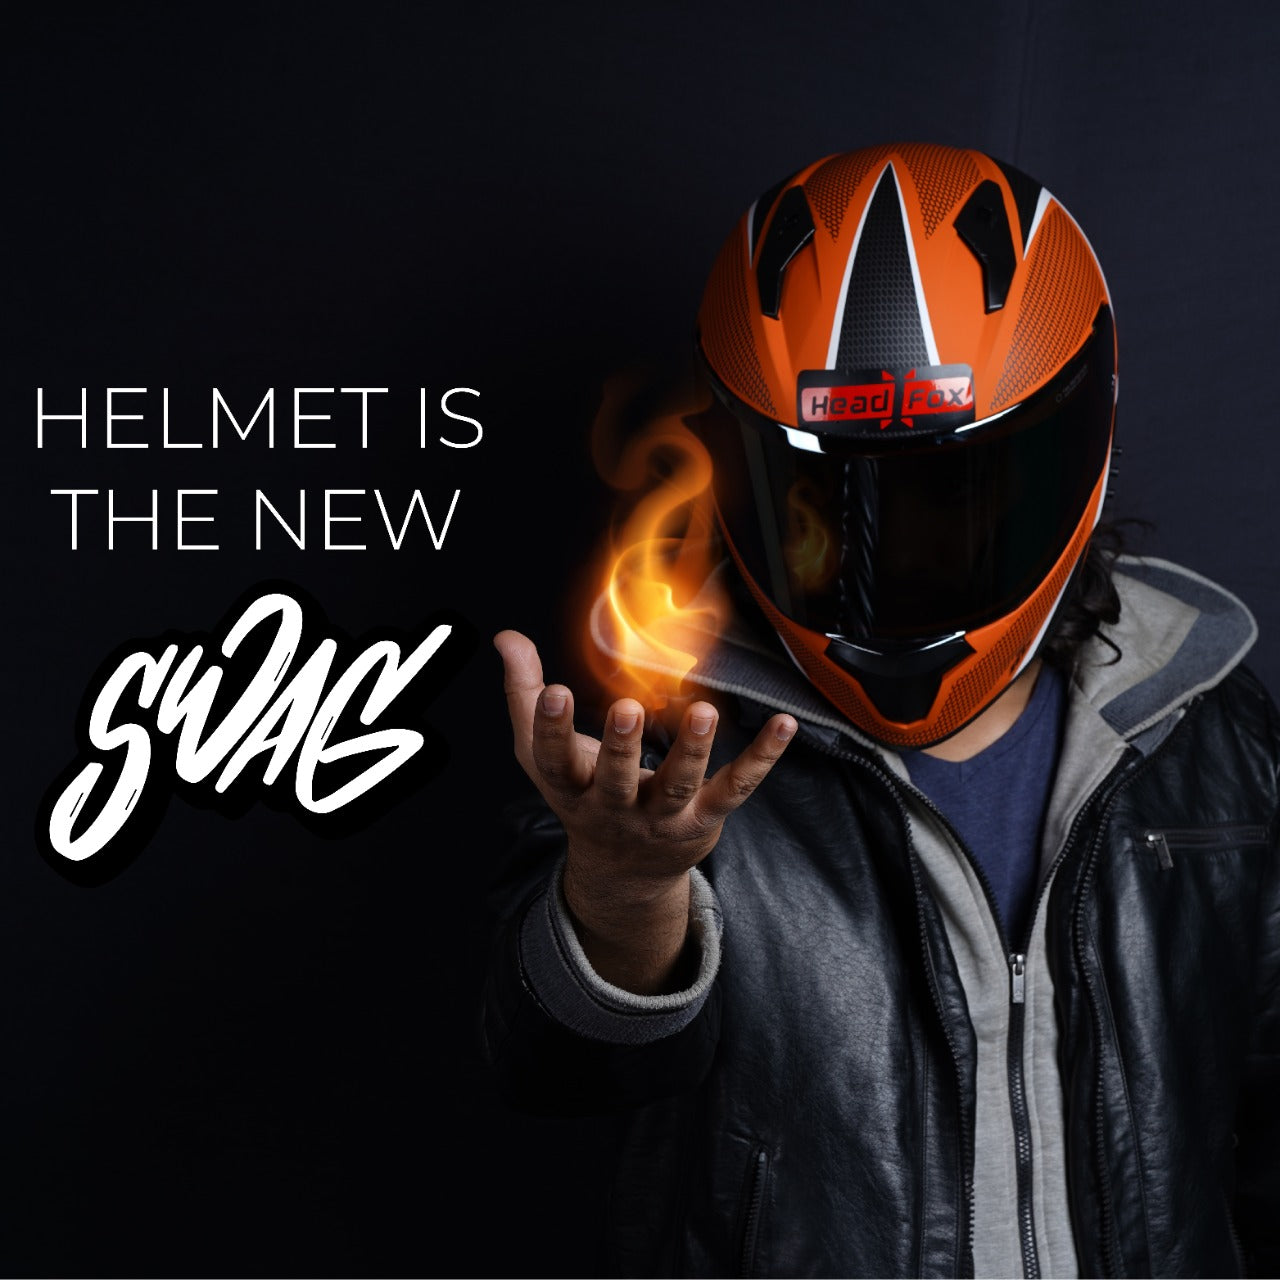 H4 Air Assasin Glossy Red Smart Bluetooth Full-face Double Visor Helmet